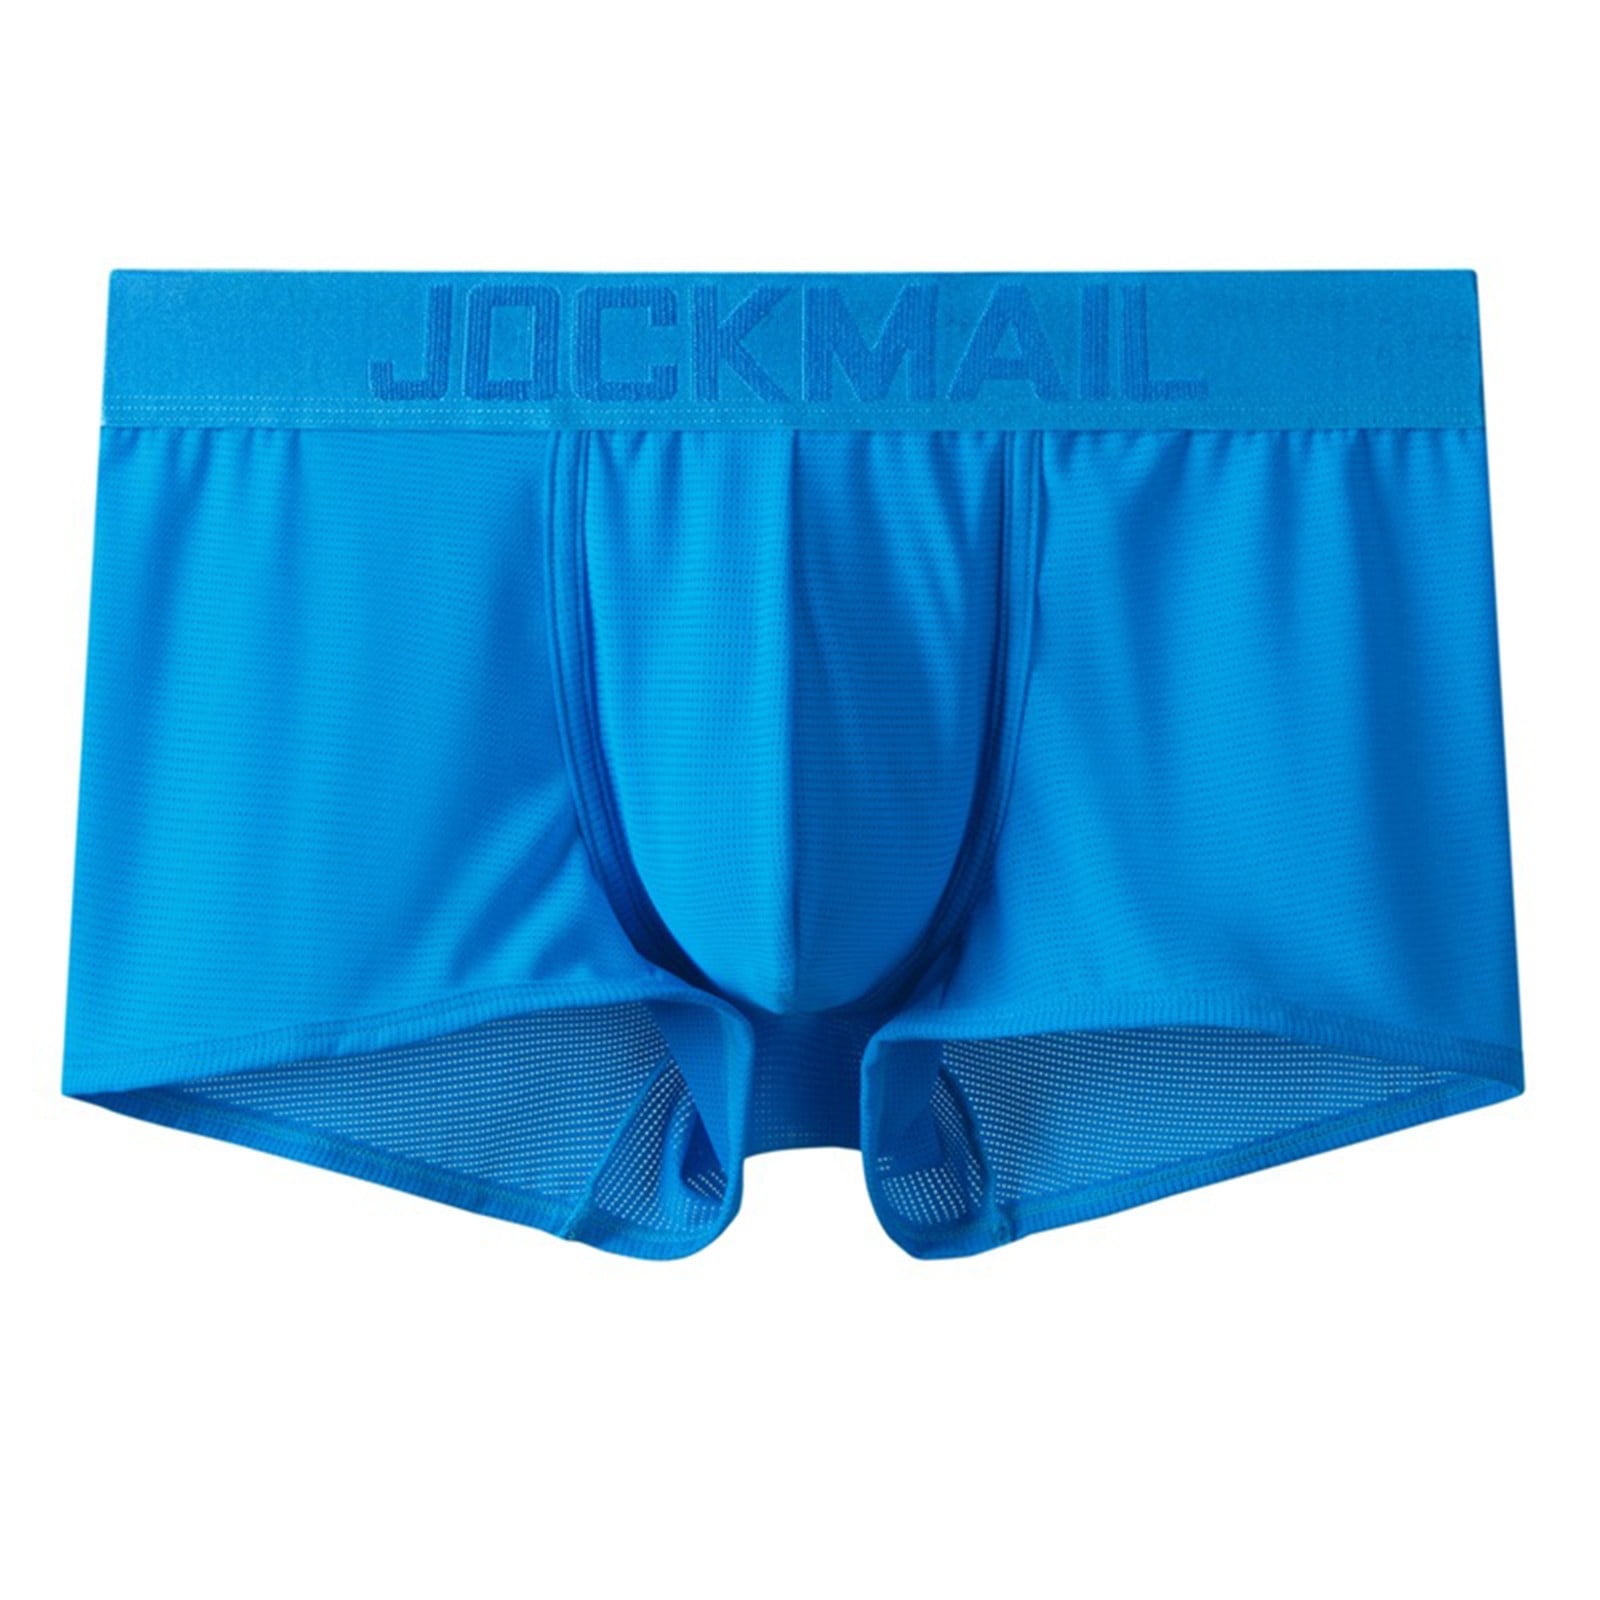 jovati Underwear for Men Boxer Briefs Men Sexy Underwear Comfortable  Sweat-absorbent Ice-Silk Cool Boxer Splic Briefs